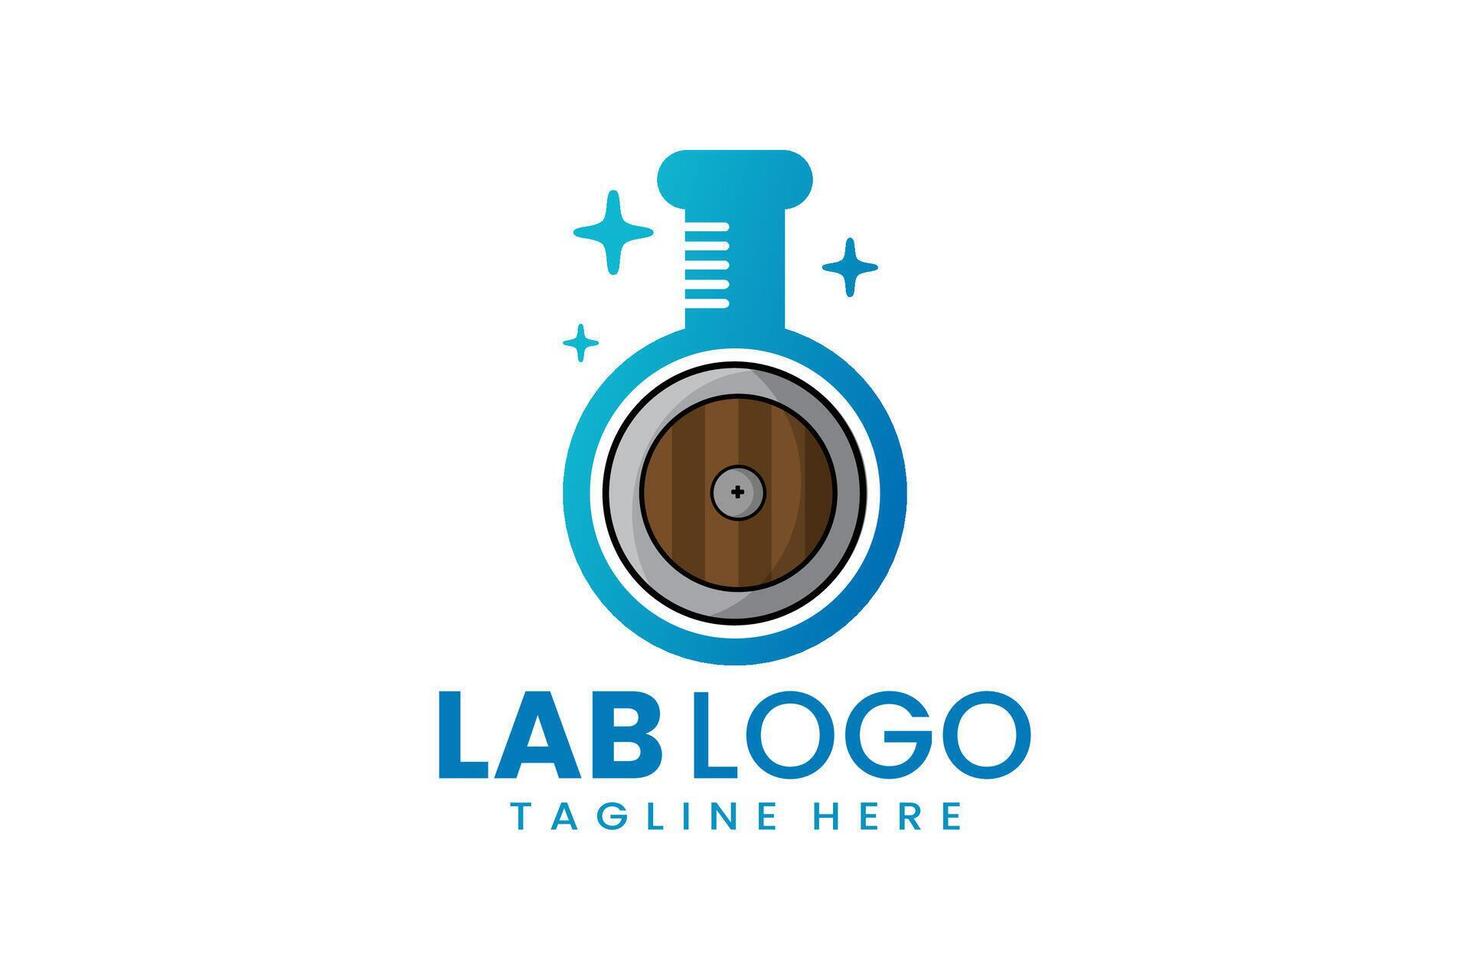 Flat modern simple shield laboratory logo template icon symbol design illustration vector